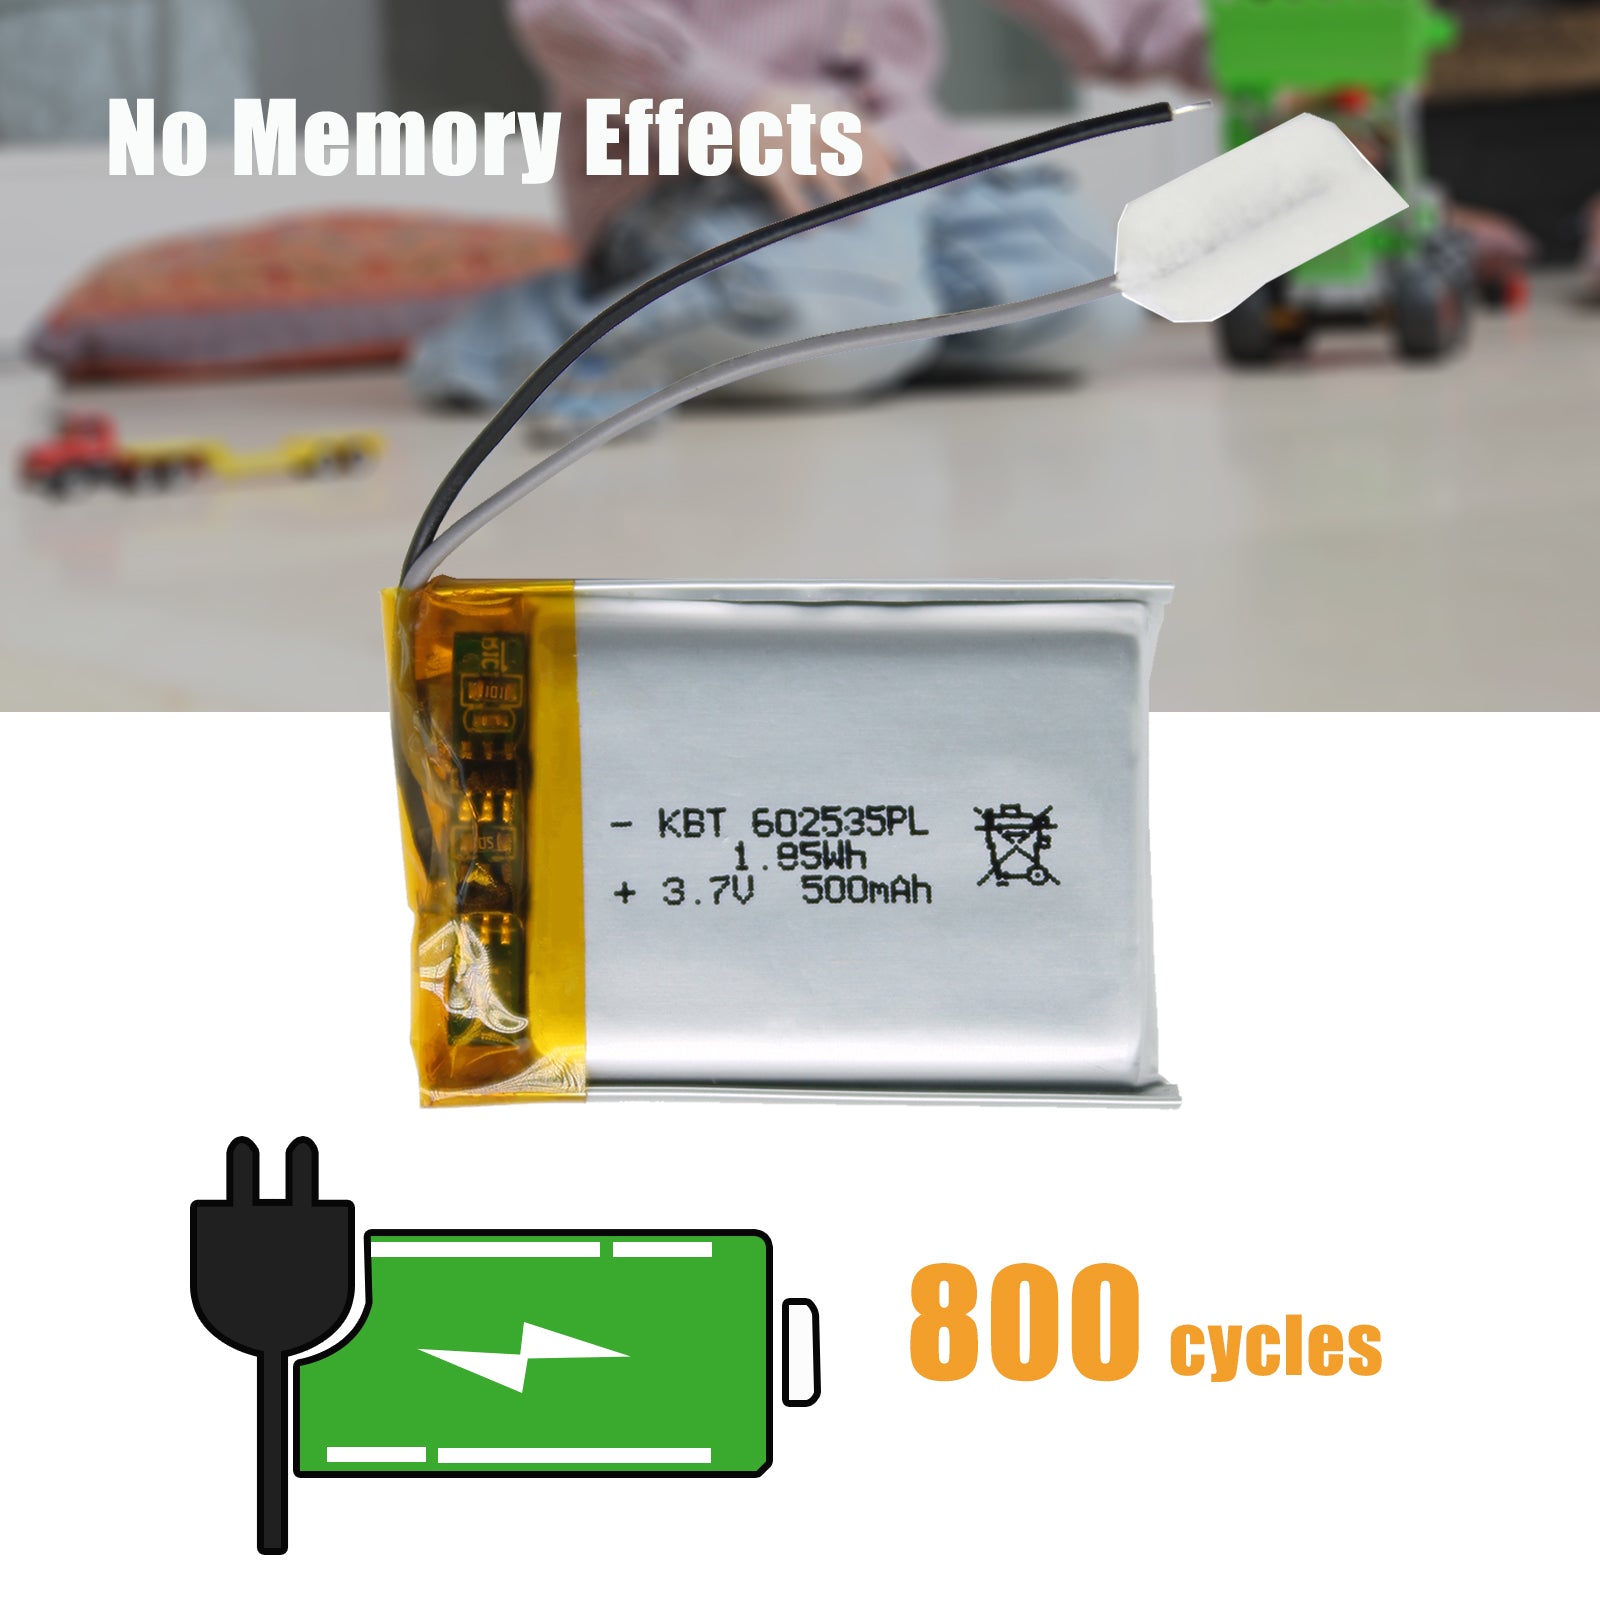 KBT 602535PL 3.7V 500mAh Li-Polymer Rechargeable Battery – KBT-BATTERY